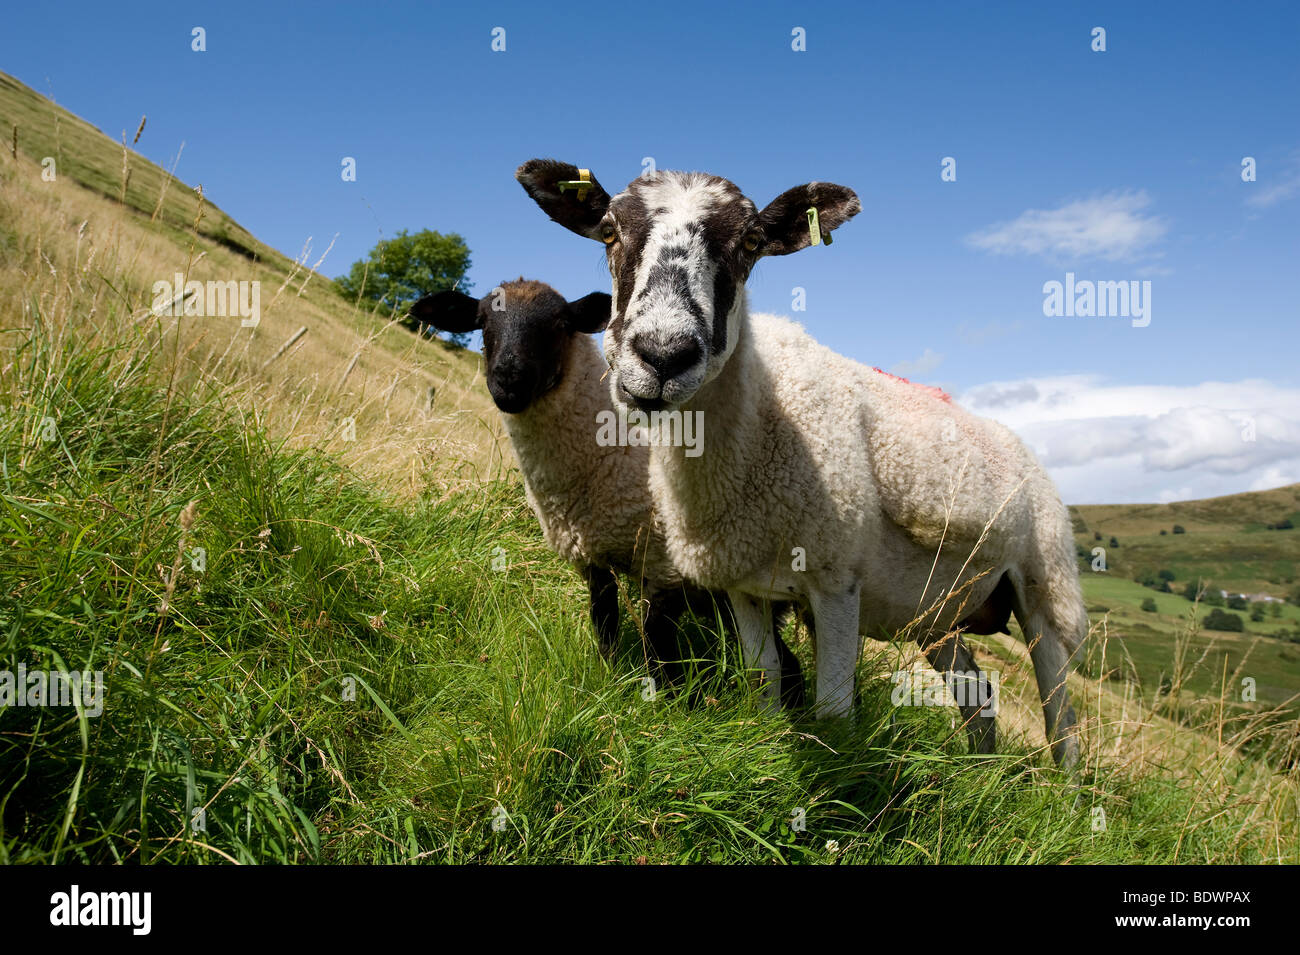 yorkshire sheep breed, derbyshire, england Stock Photo